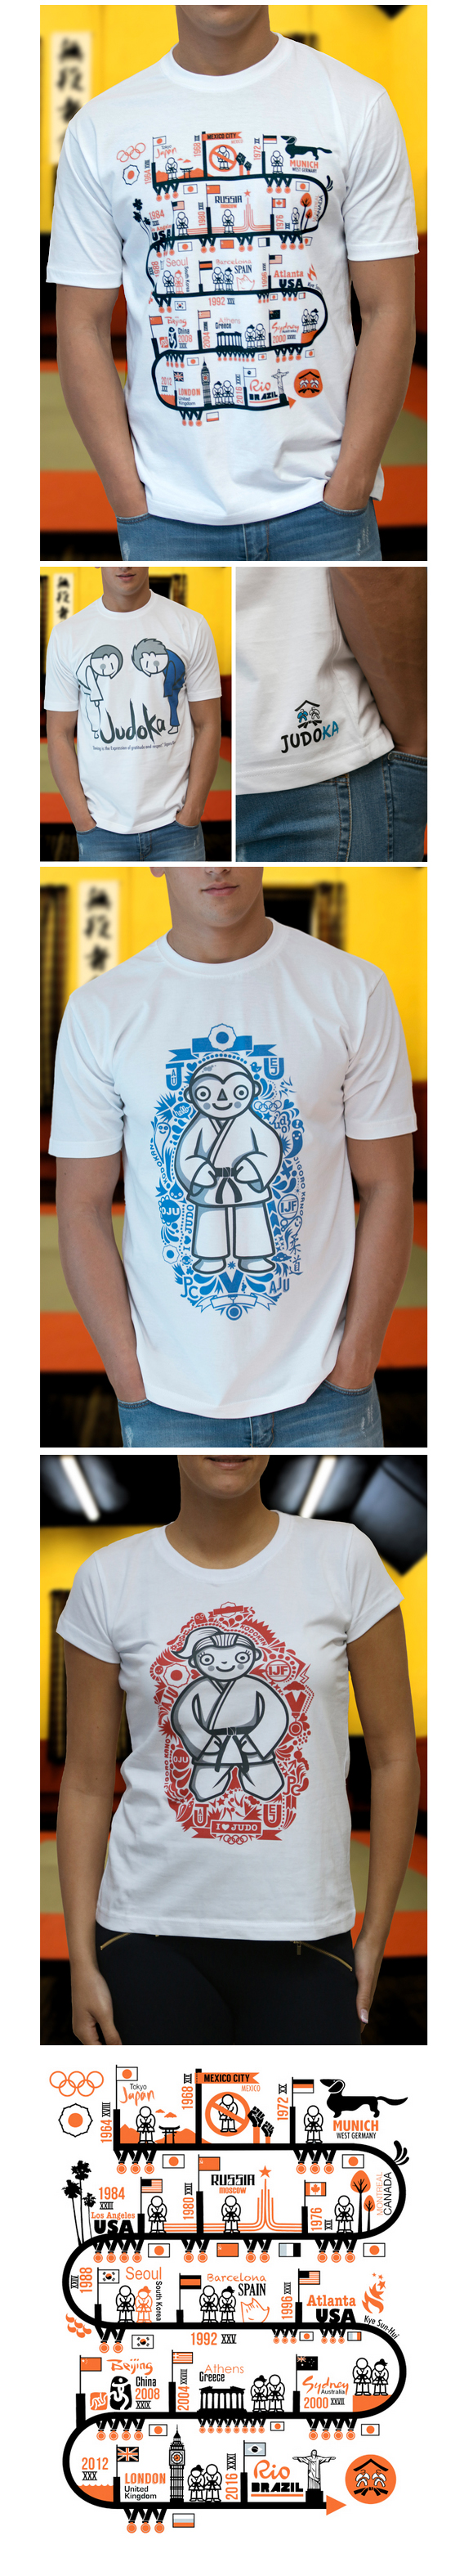 Judo Judoka   characters wotto detailed timeline infographic Olympics history t-shirts logo